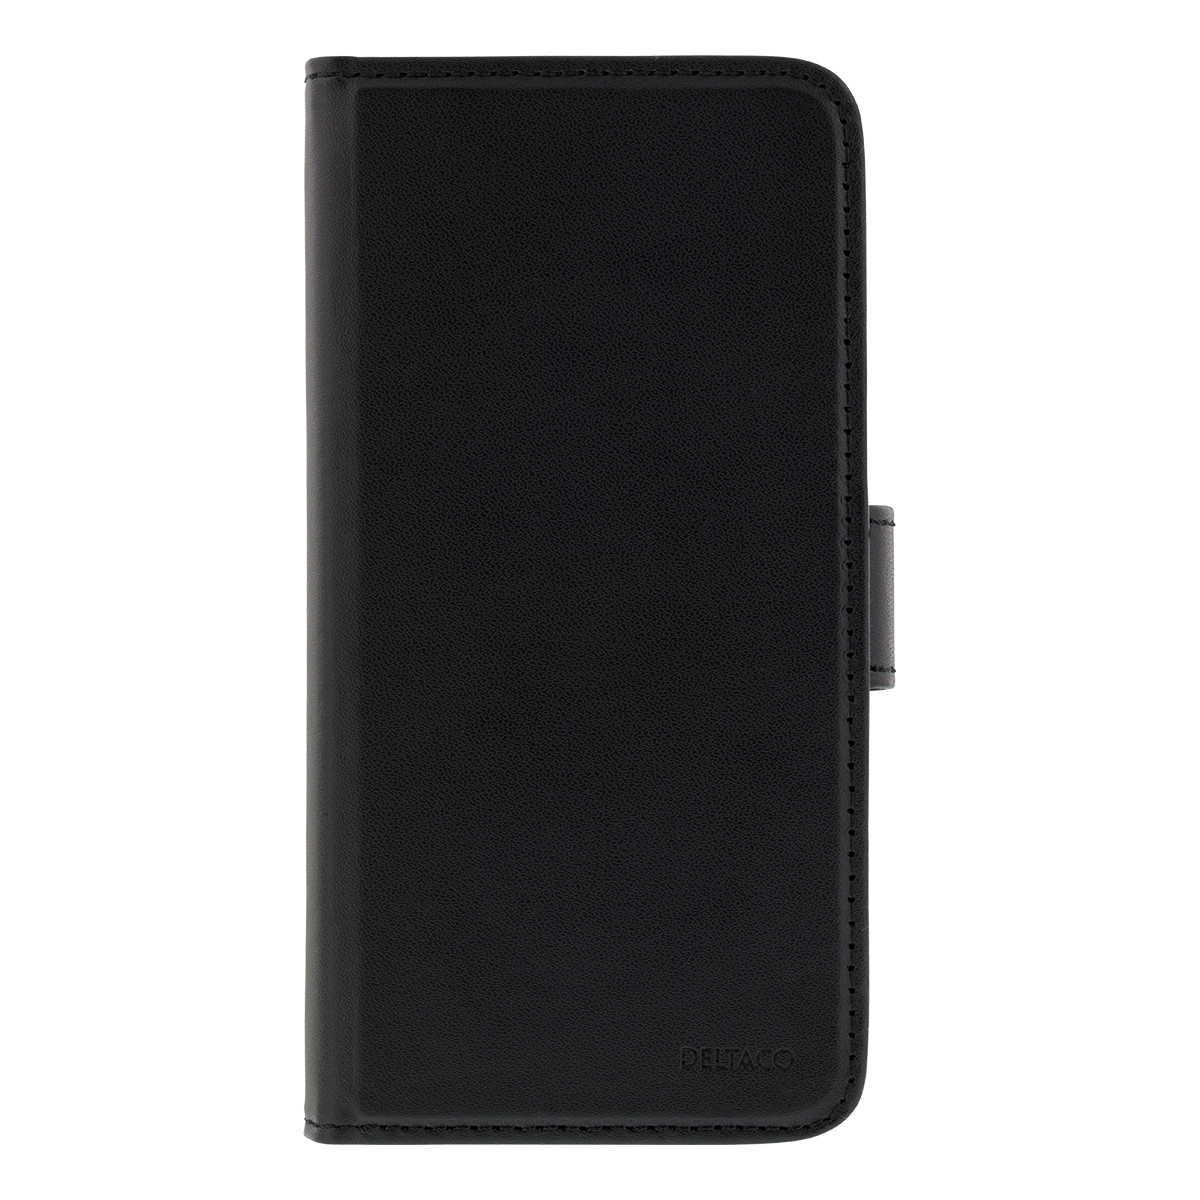 DELTACO Plånboksfodral till iPhone XR, svart